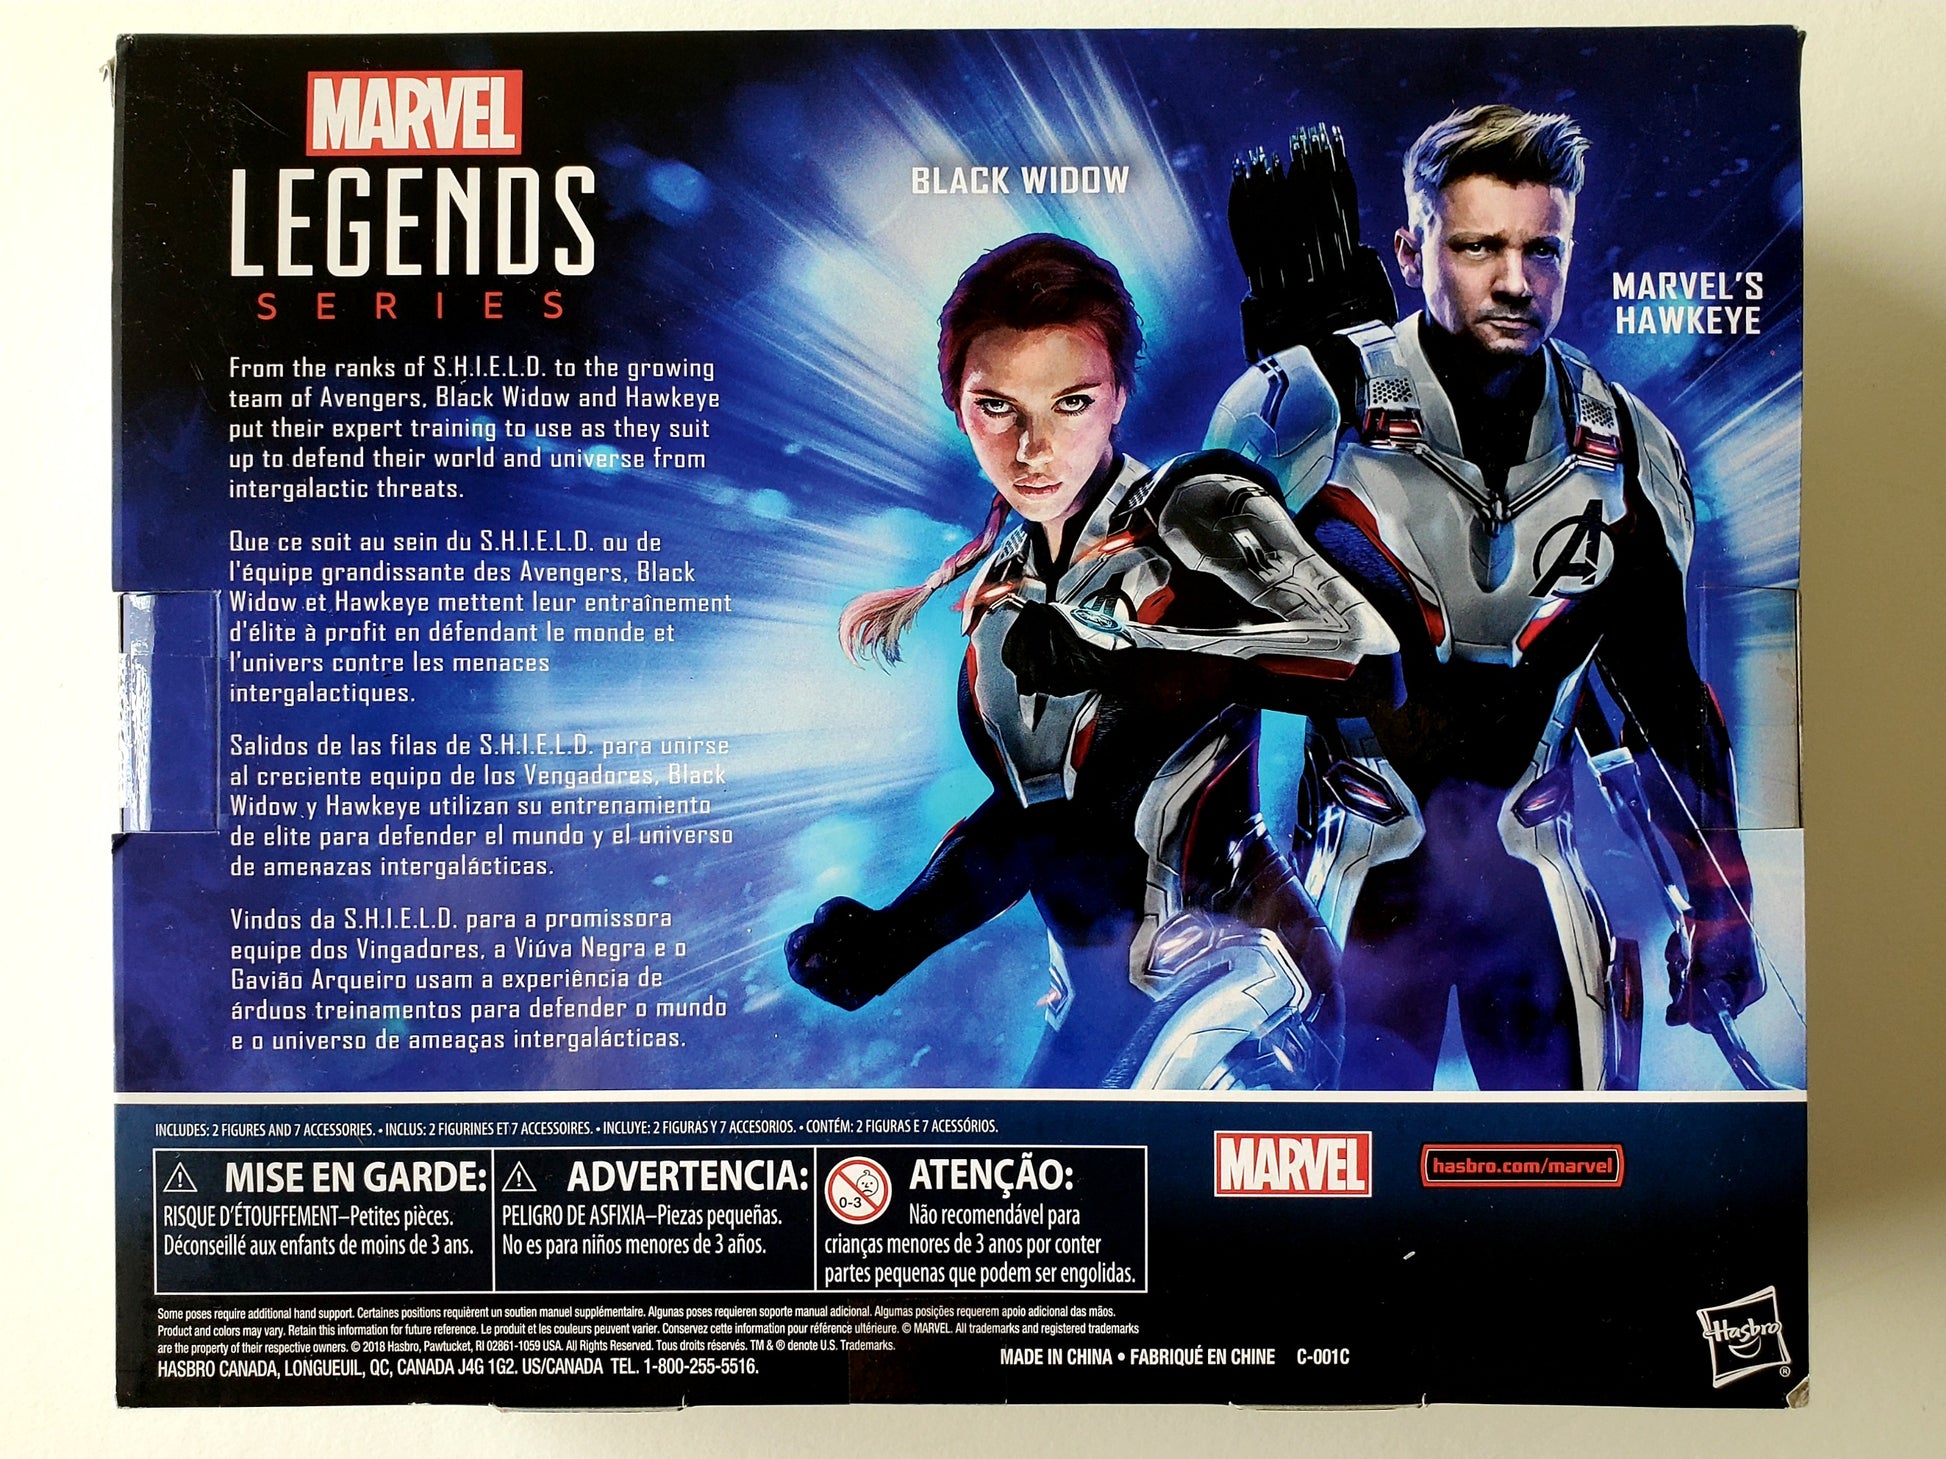 Marvel Legends Avengers: Endgame Hawkeye and Black Widow Exclusive